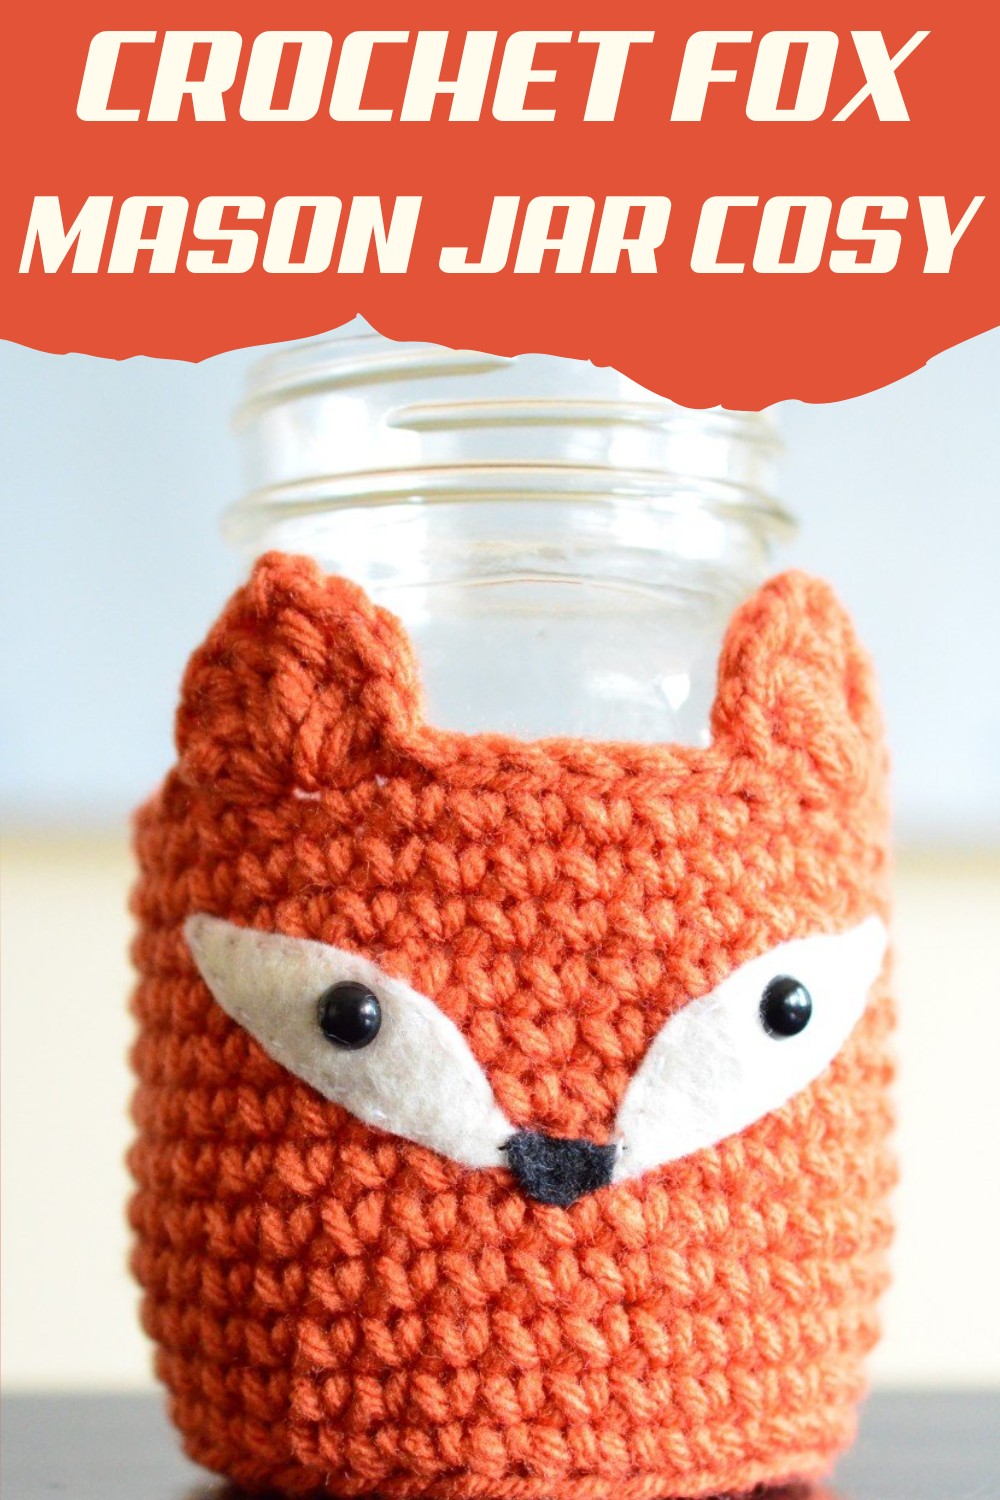 Crochet Fox Mason Jar Cosy